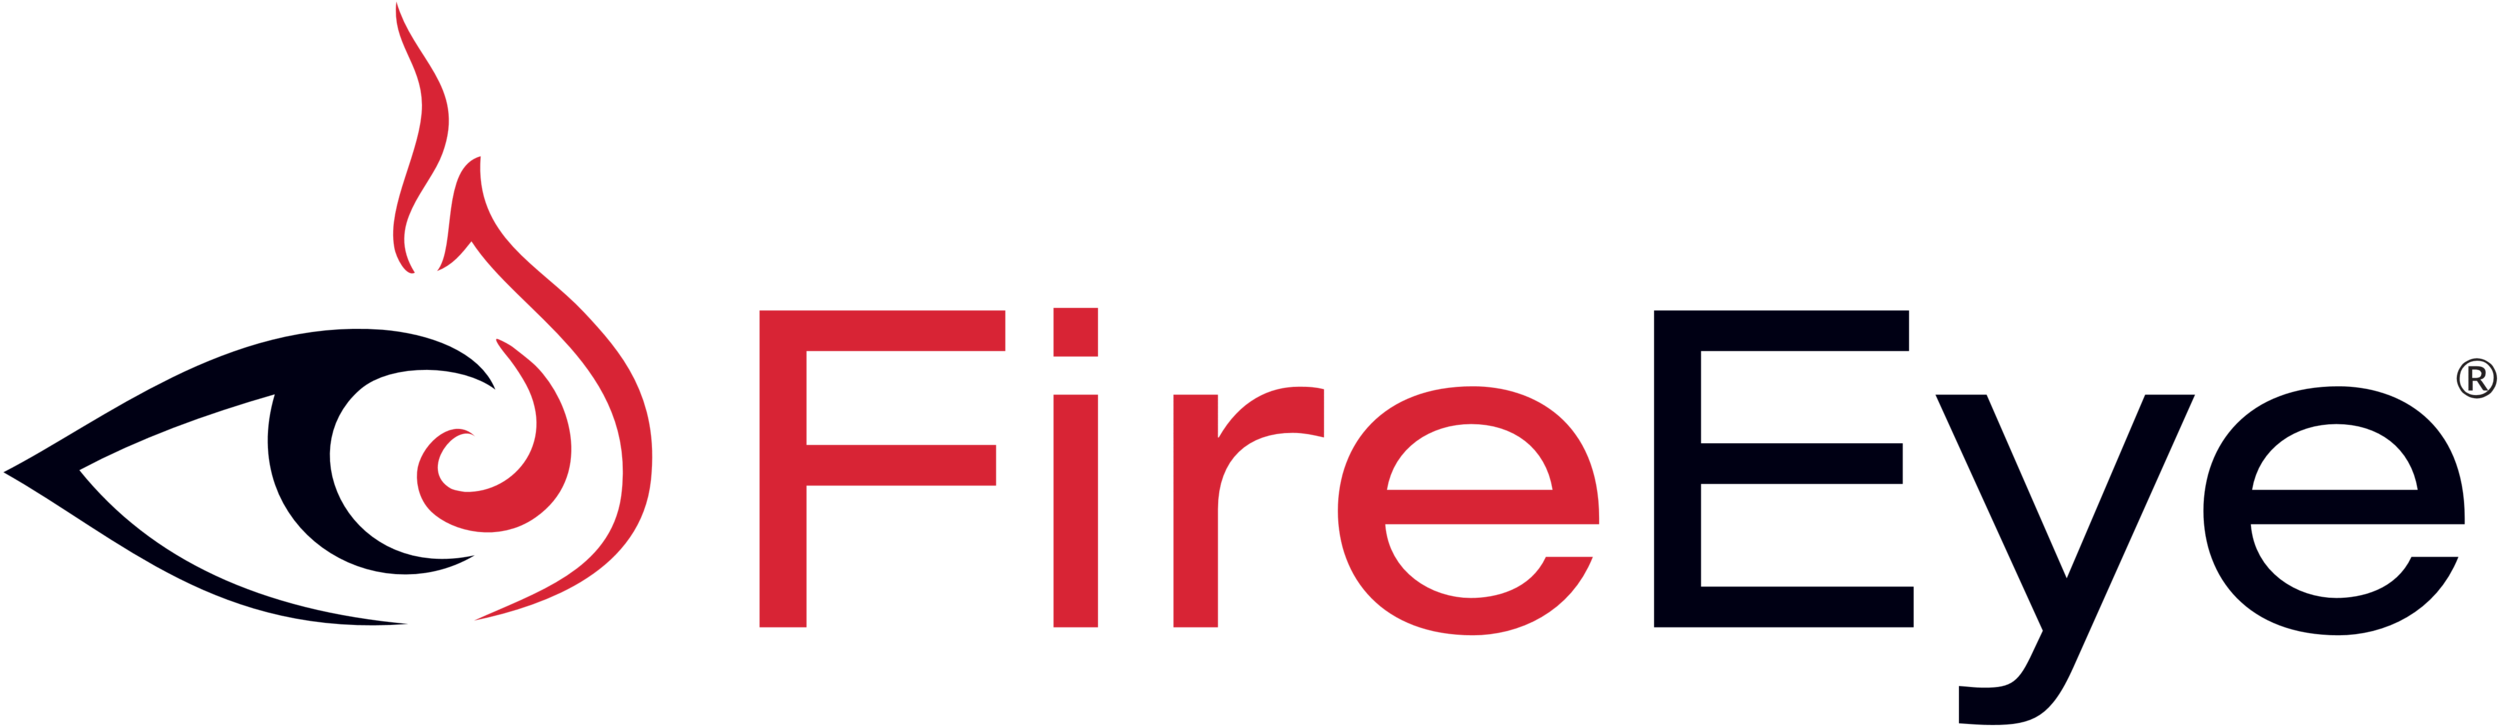 FireEye_logo_logotipo.png